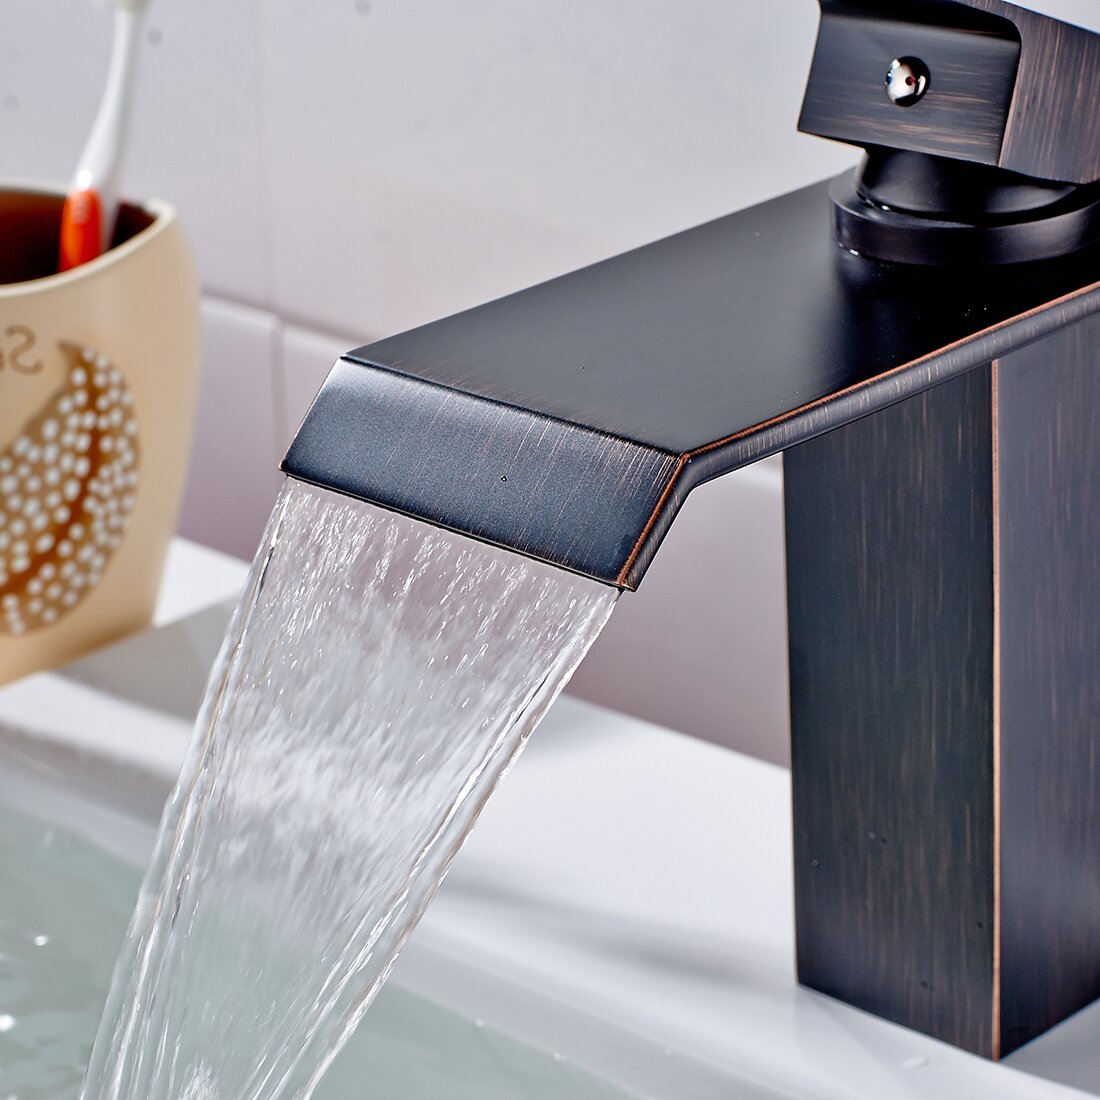 Luxe SUS 304 lavabo salle de bain robinet noir mat cascade robinet évier mitigeur salle de bain évier robinet